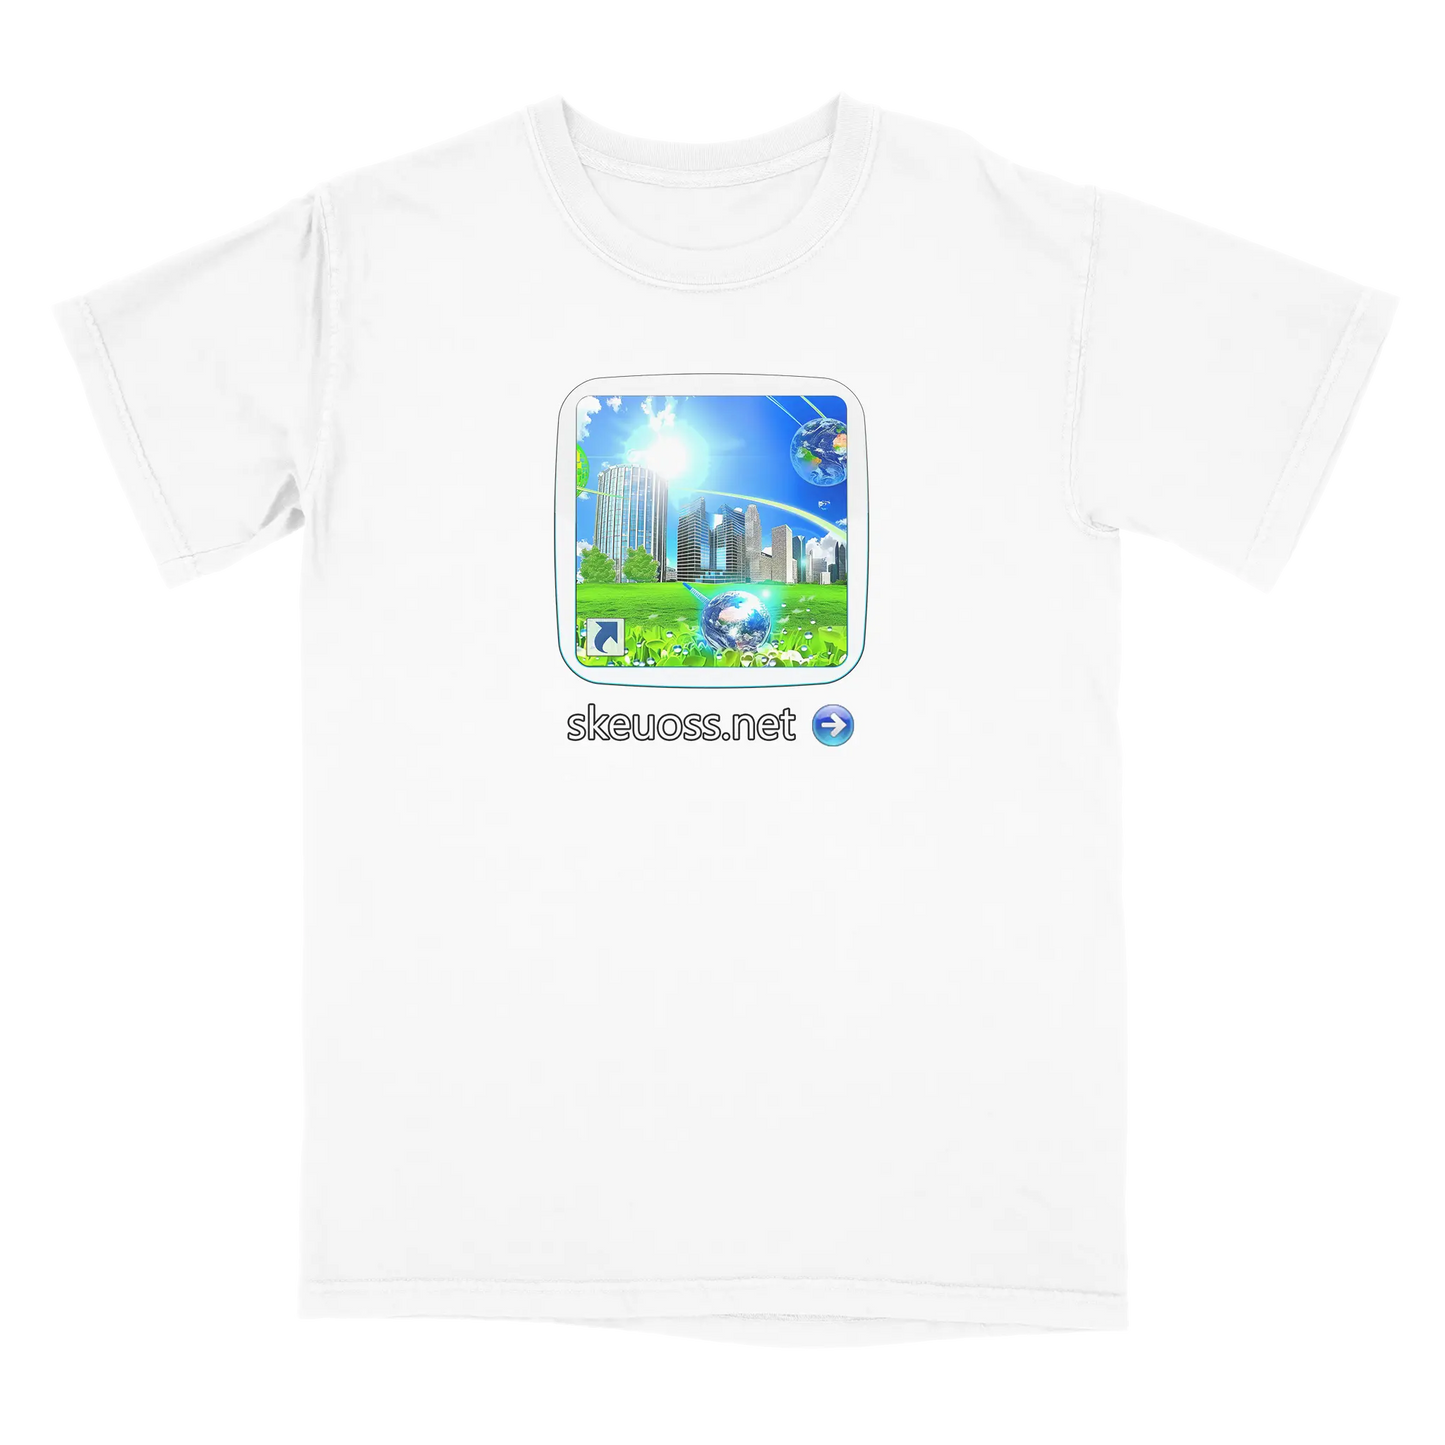 Frutiger Aero T-shirt - User Login Collection - User 398